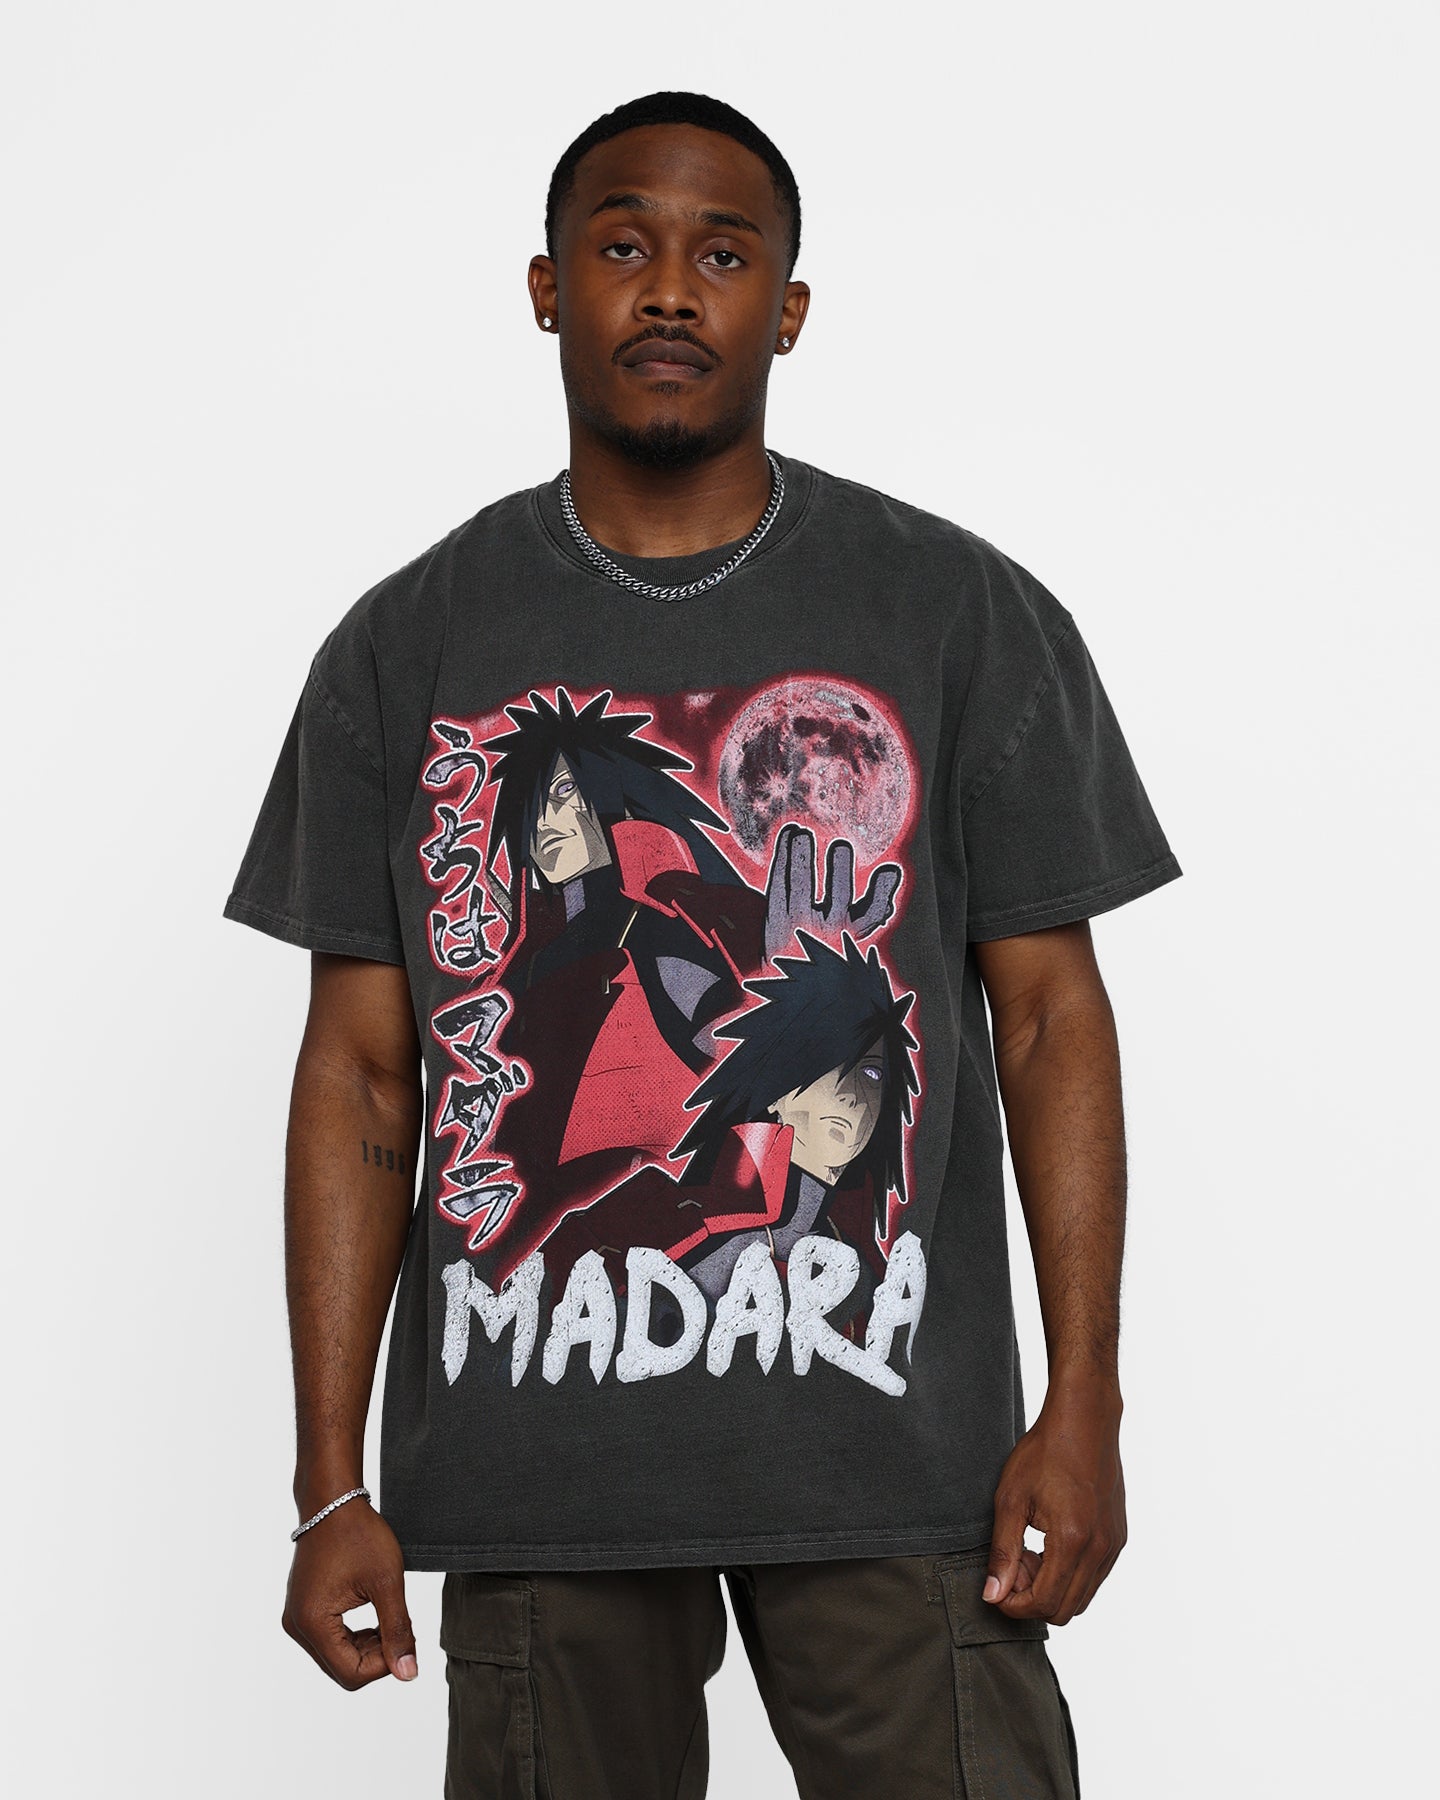 Goat Crew X Naruto Madara Heavyweight Vintage T-Shirt